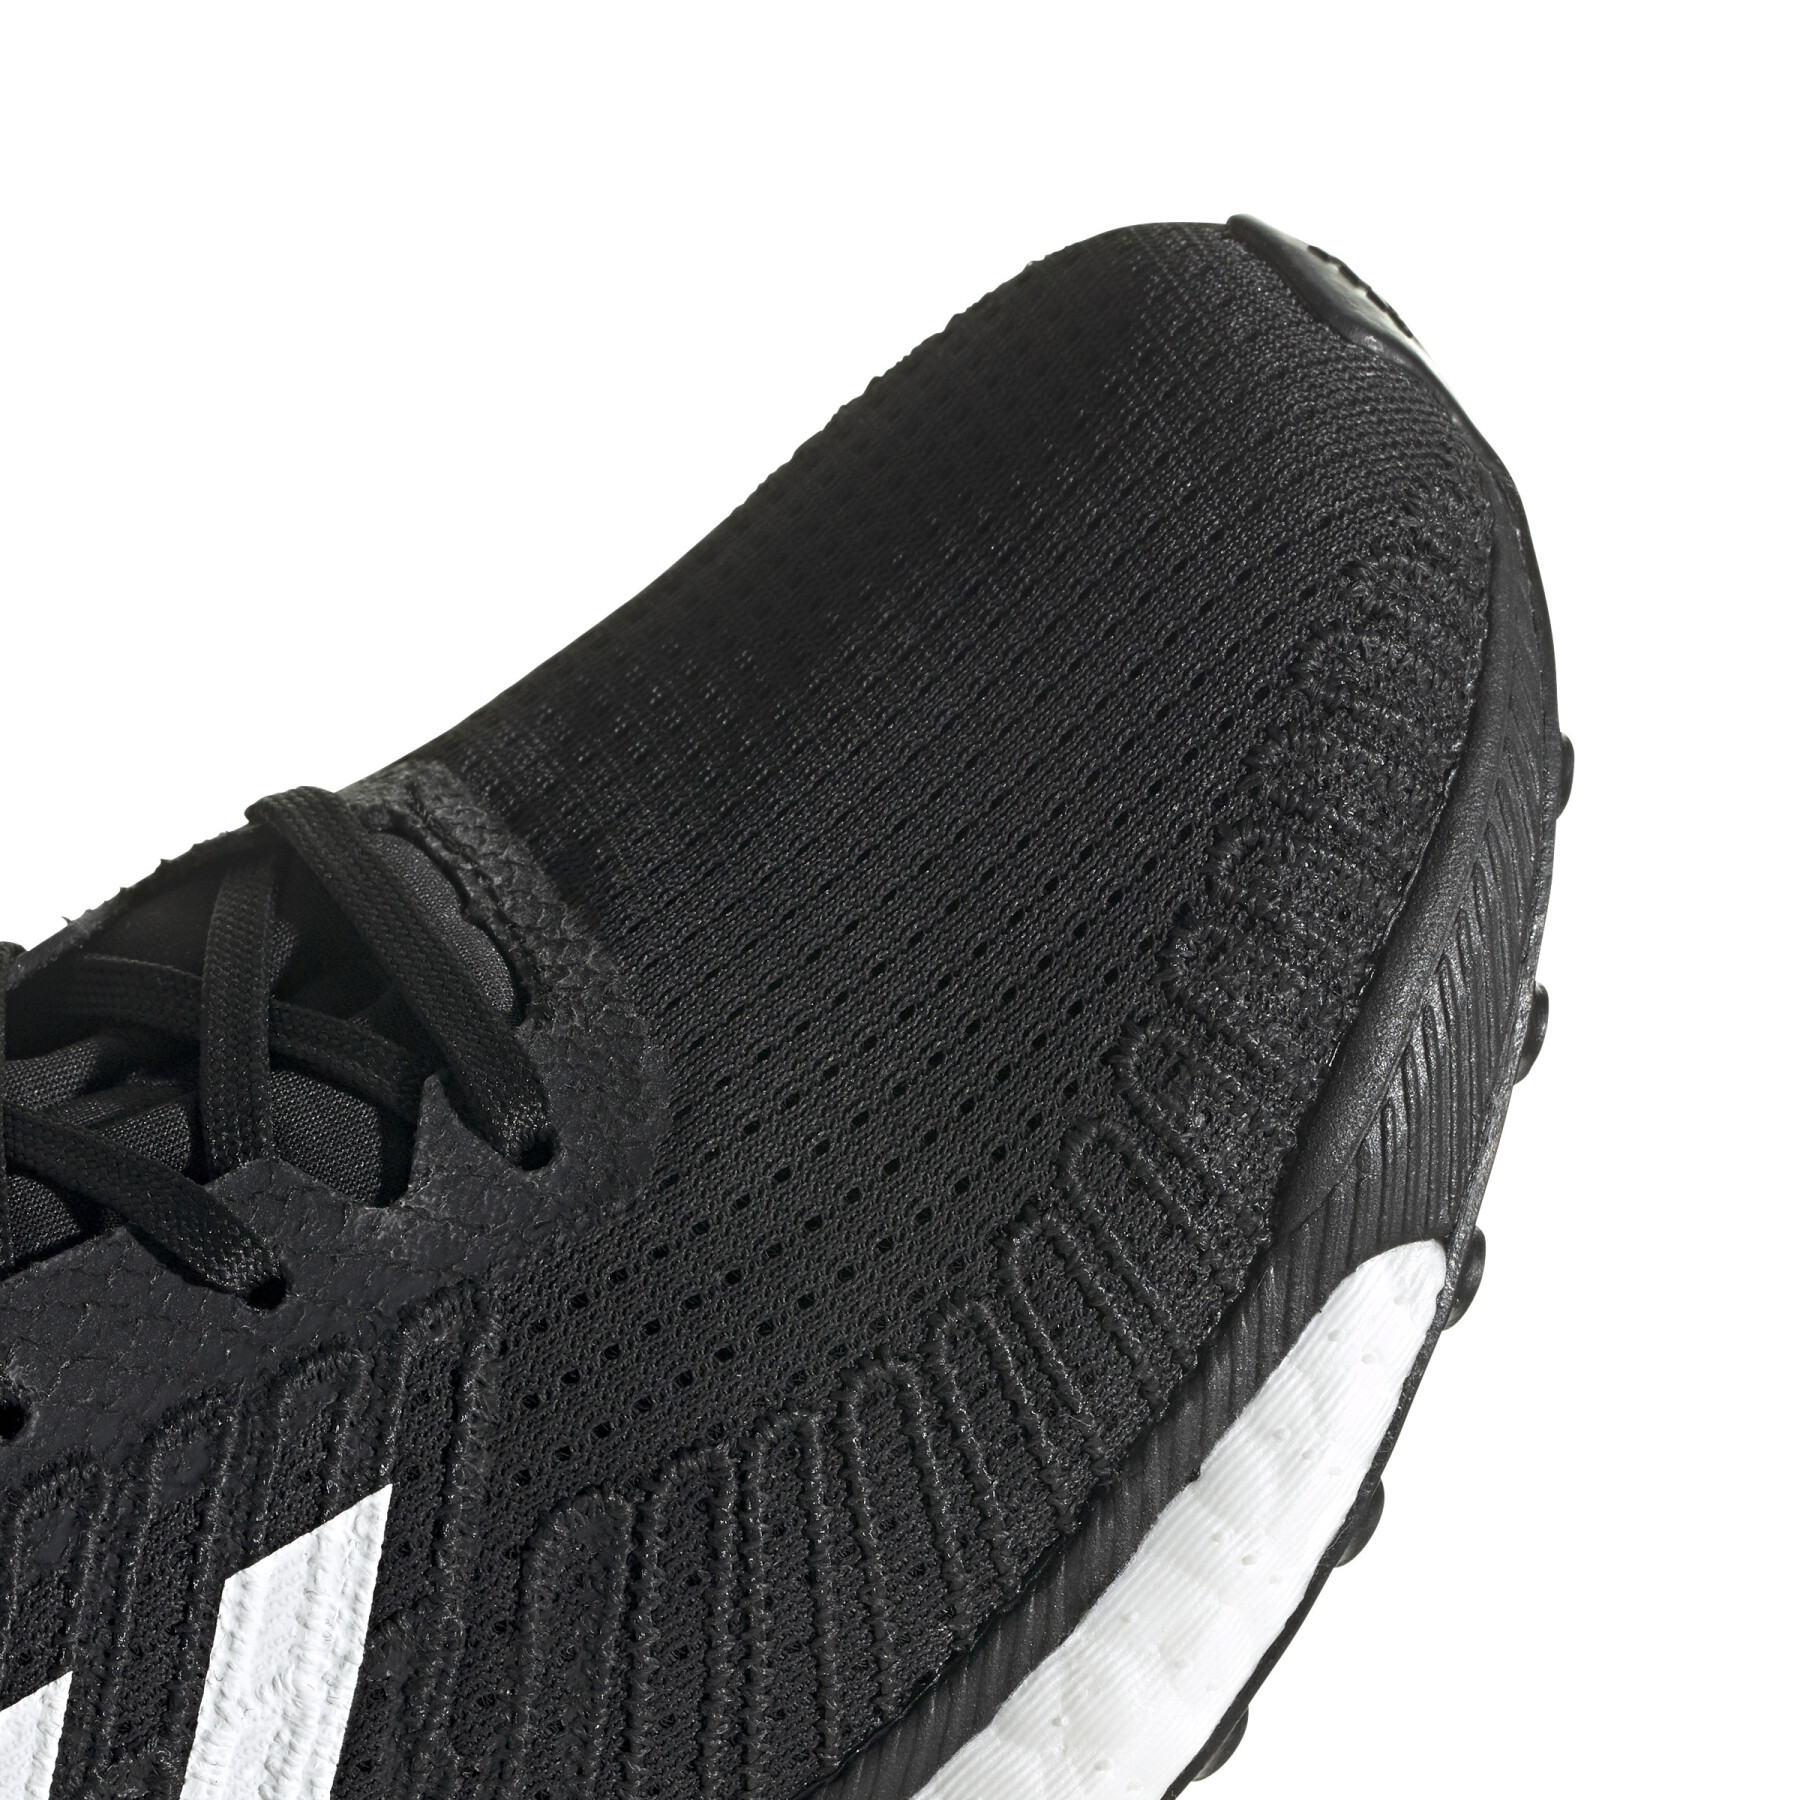 Chaussures de running femme adidas Solarboost 19